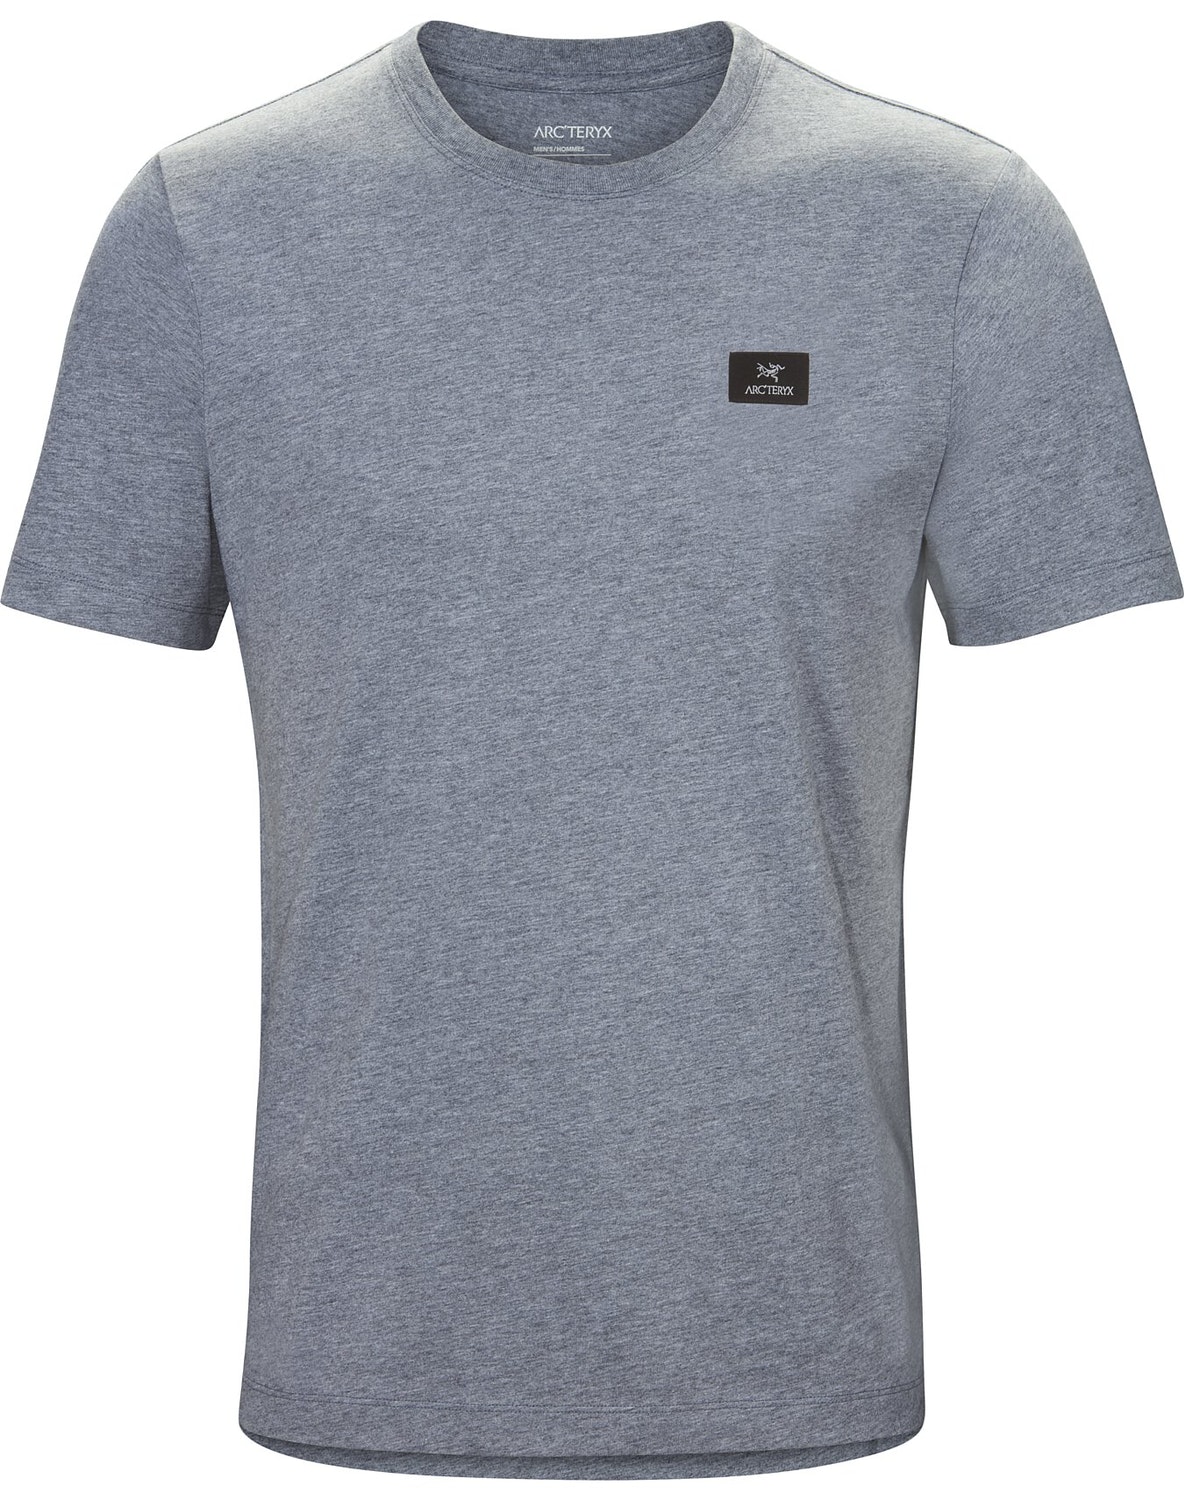 T-shirt Arc'teryx Emblem Patch Uomo Grigie - IT-496473